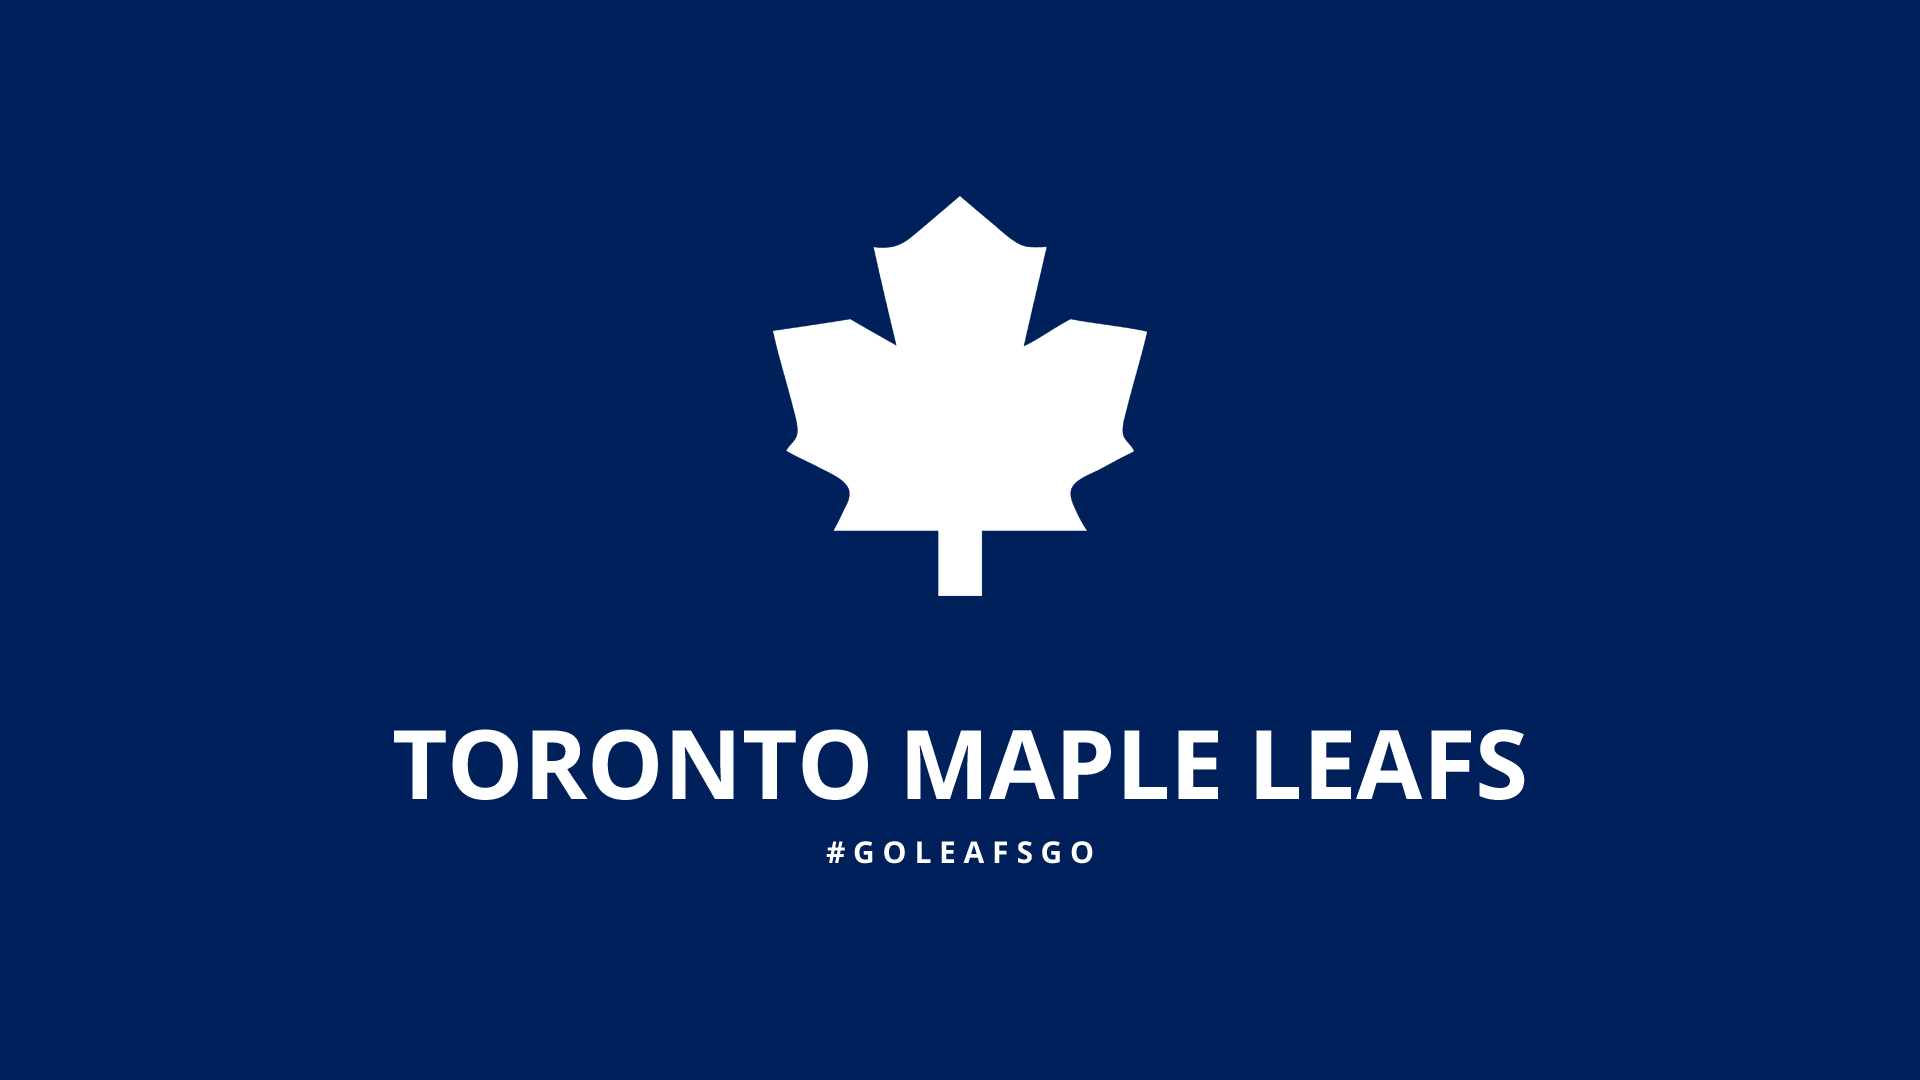 More Like Minimalist Toronto Maple Leafs wallpaper